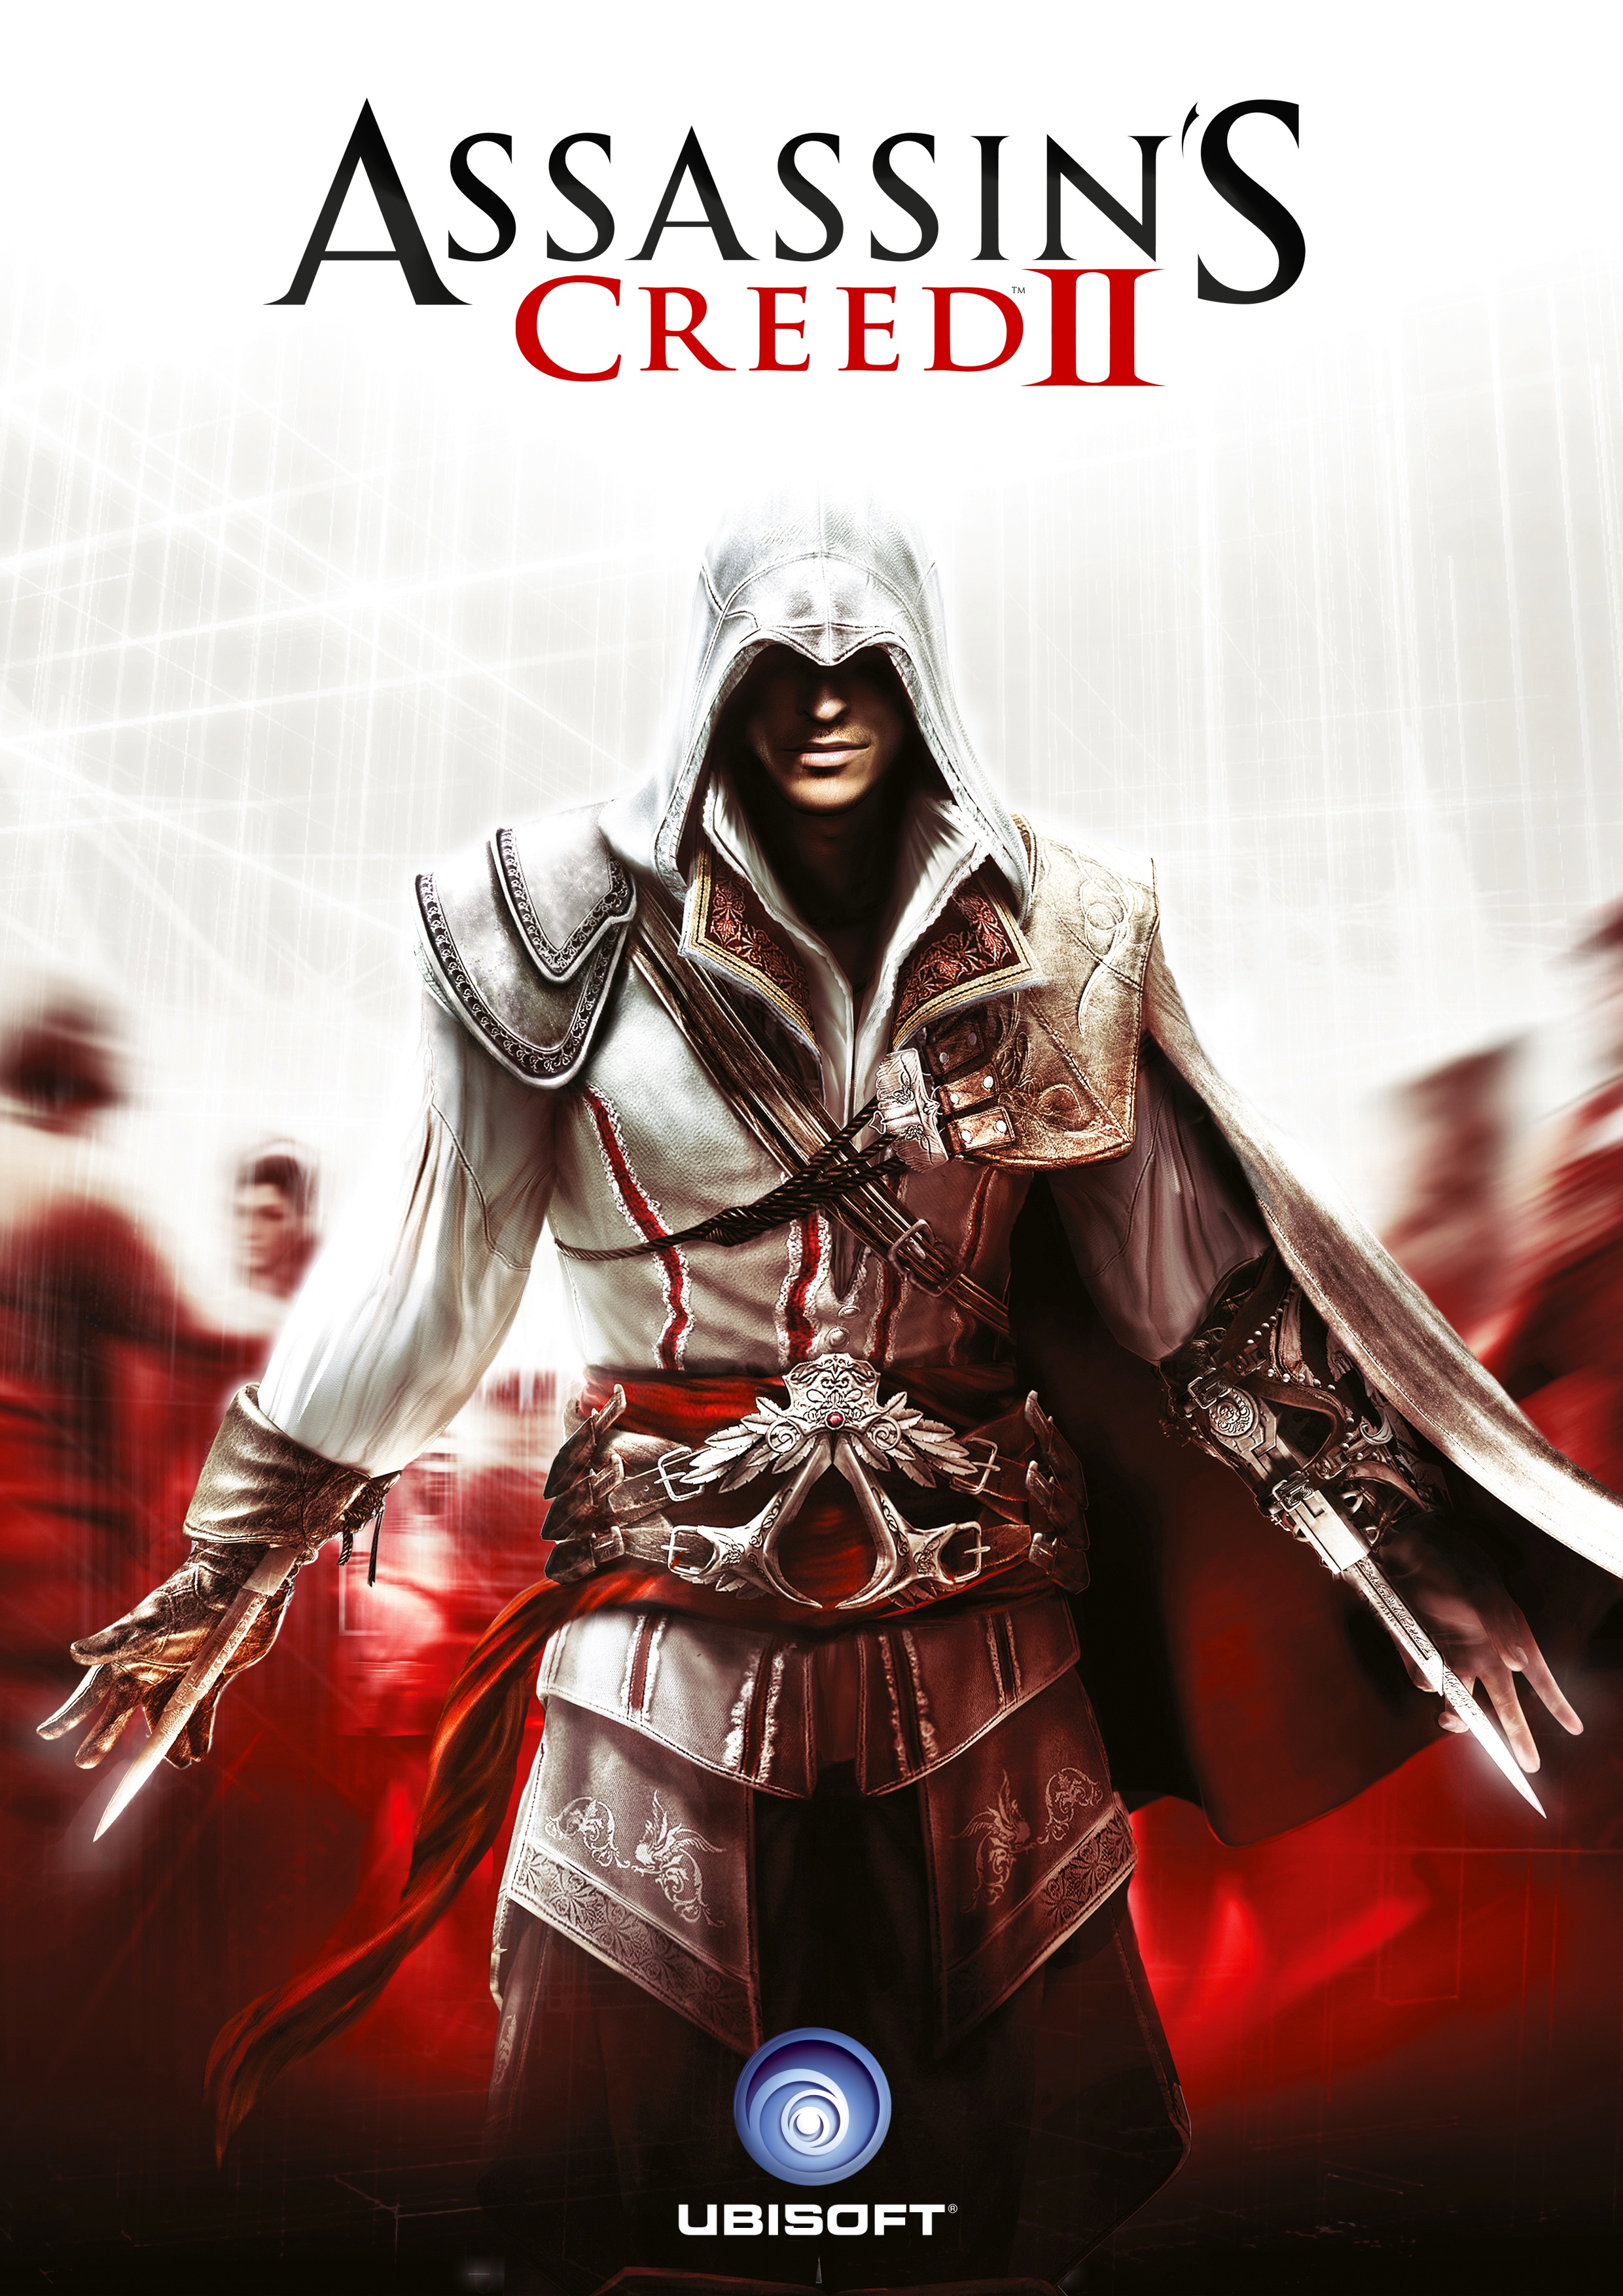 kindben komme ud for forholdsord Assassin's Creed II | Assassin's Creed Wiki | Fandom